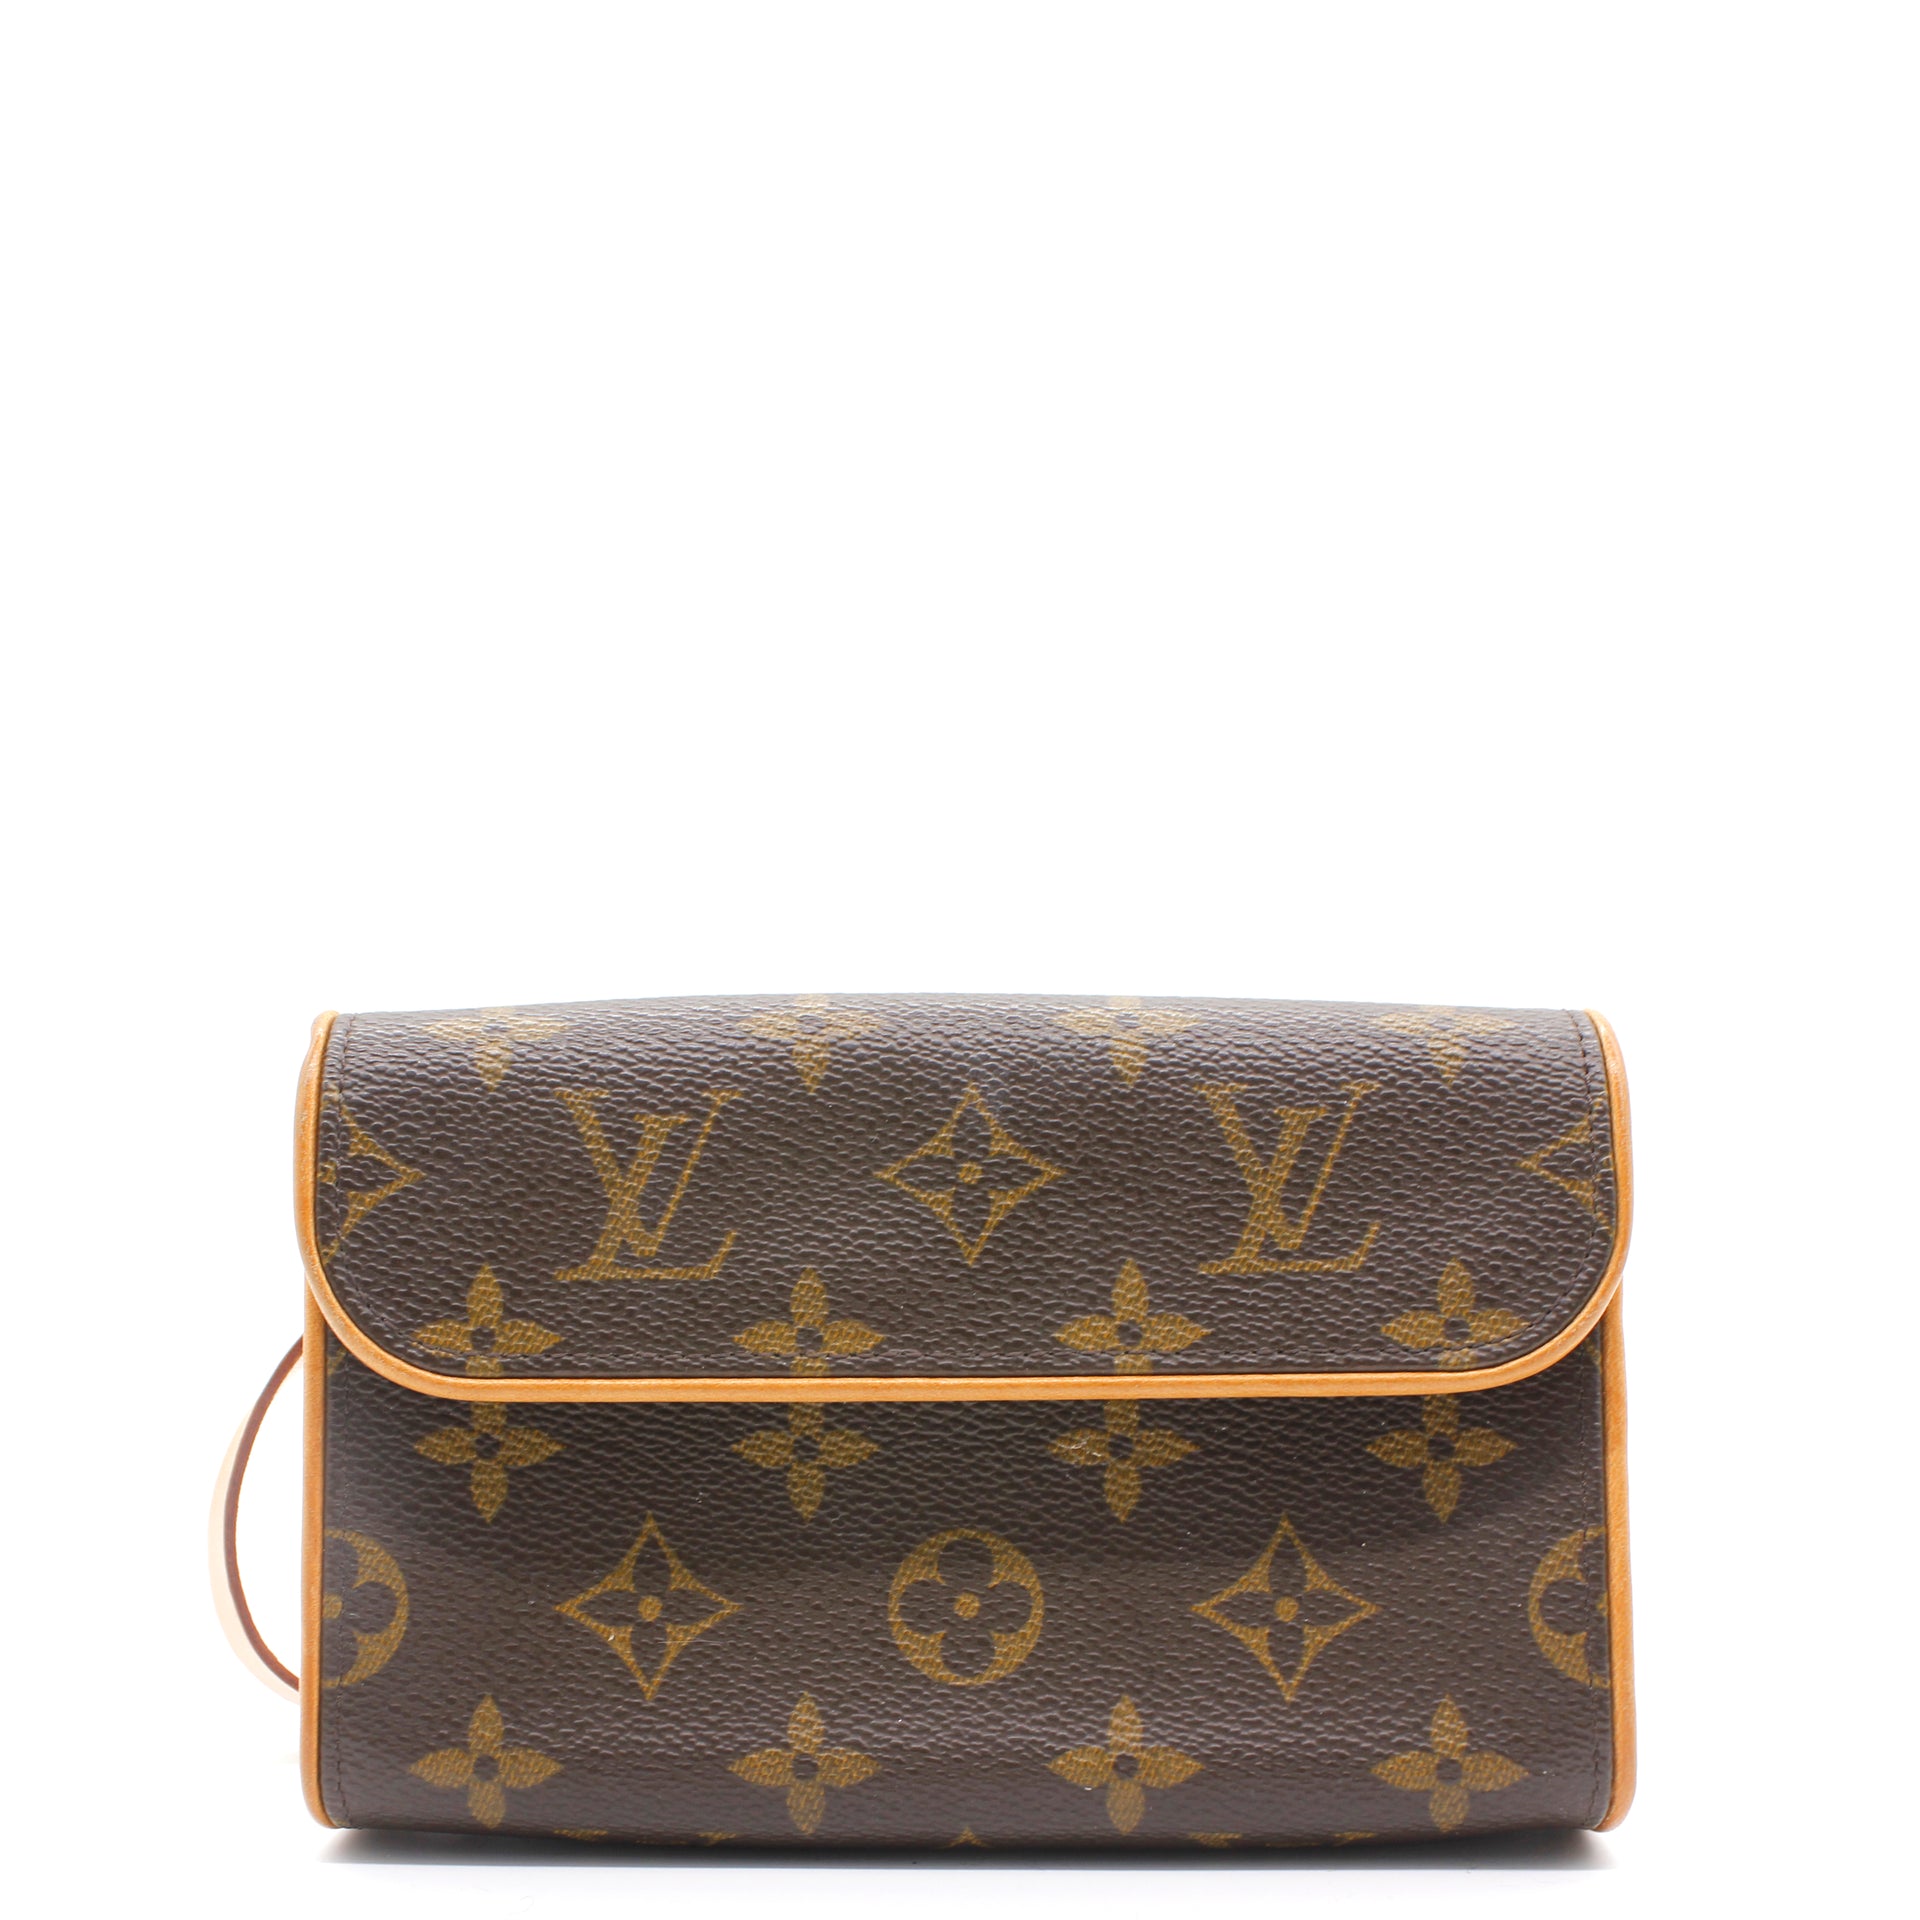 Buy Louis Vuitton Classic Monogram Waist Bag Online in Australia